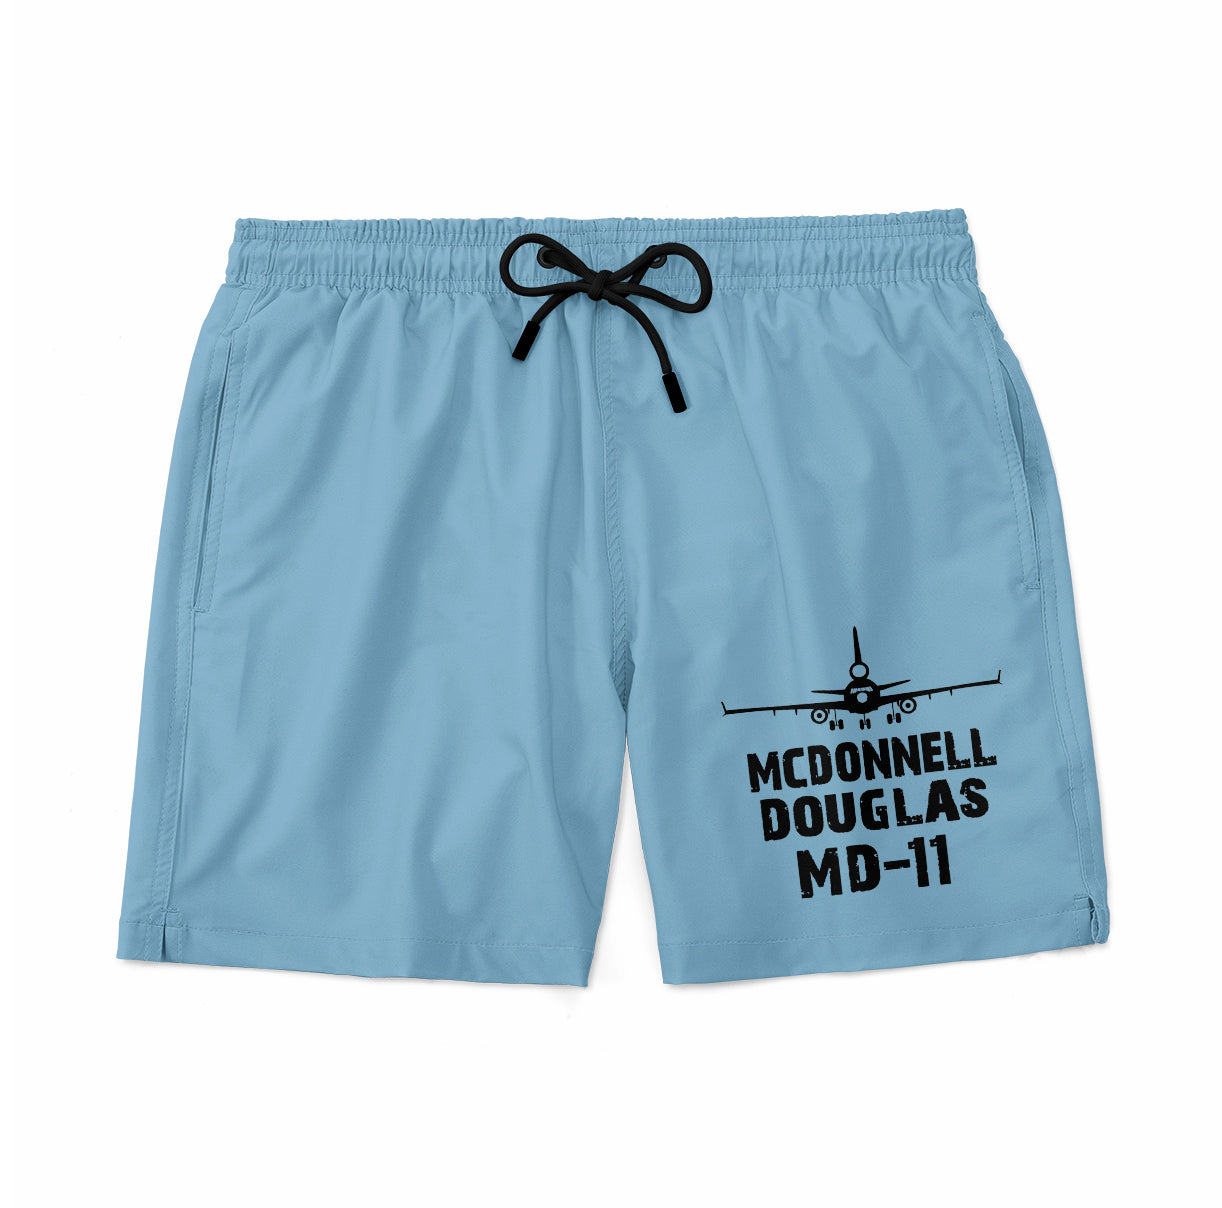 McDonnell Douglas MD-11 & Plane Designed Swim Trunks & Shorts